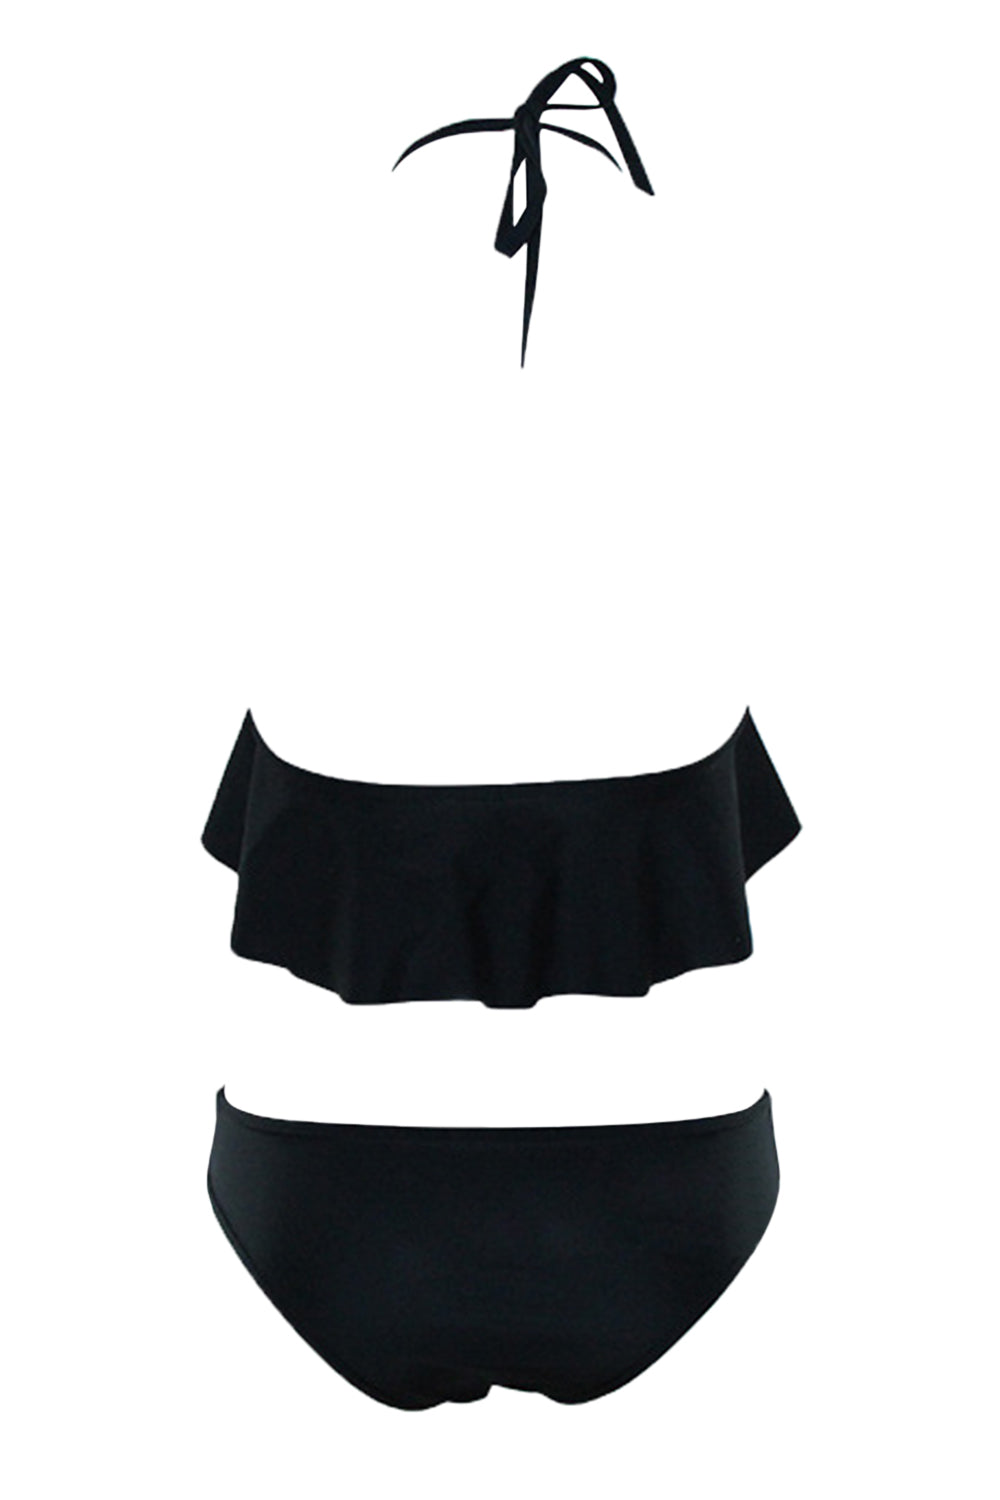 Iyasson Black Embroidery Falbala Halter Bikini Sets